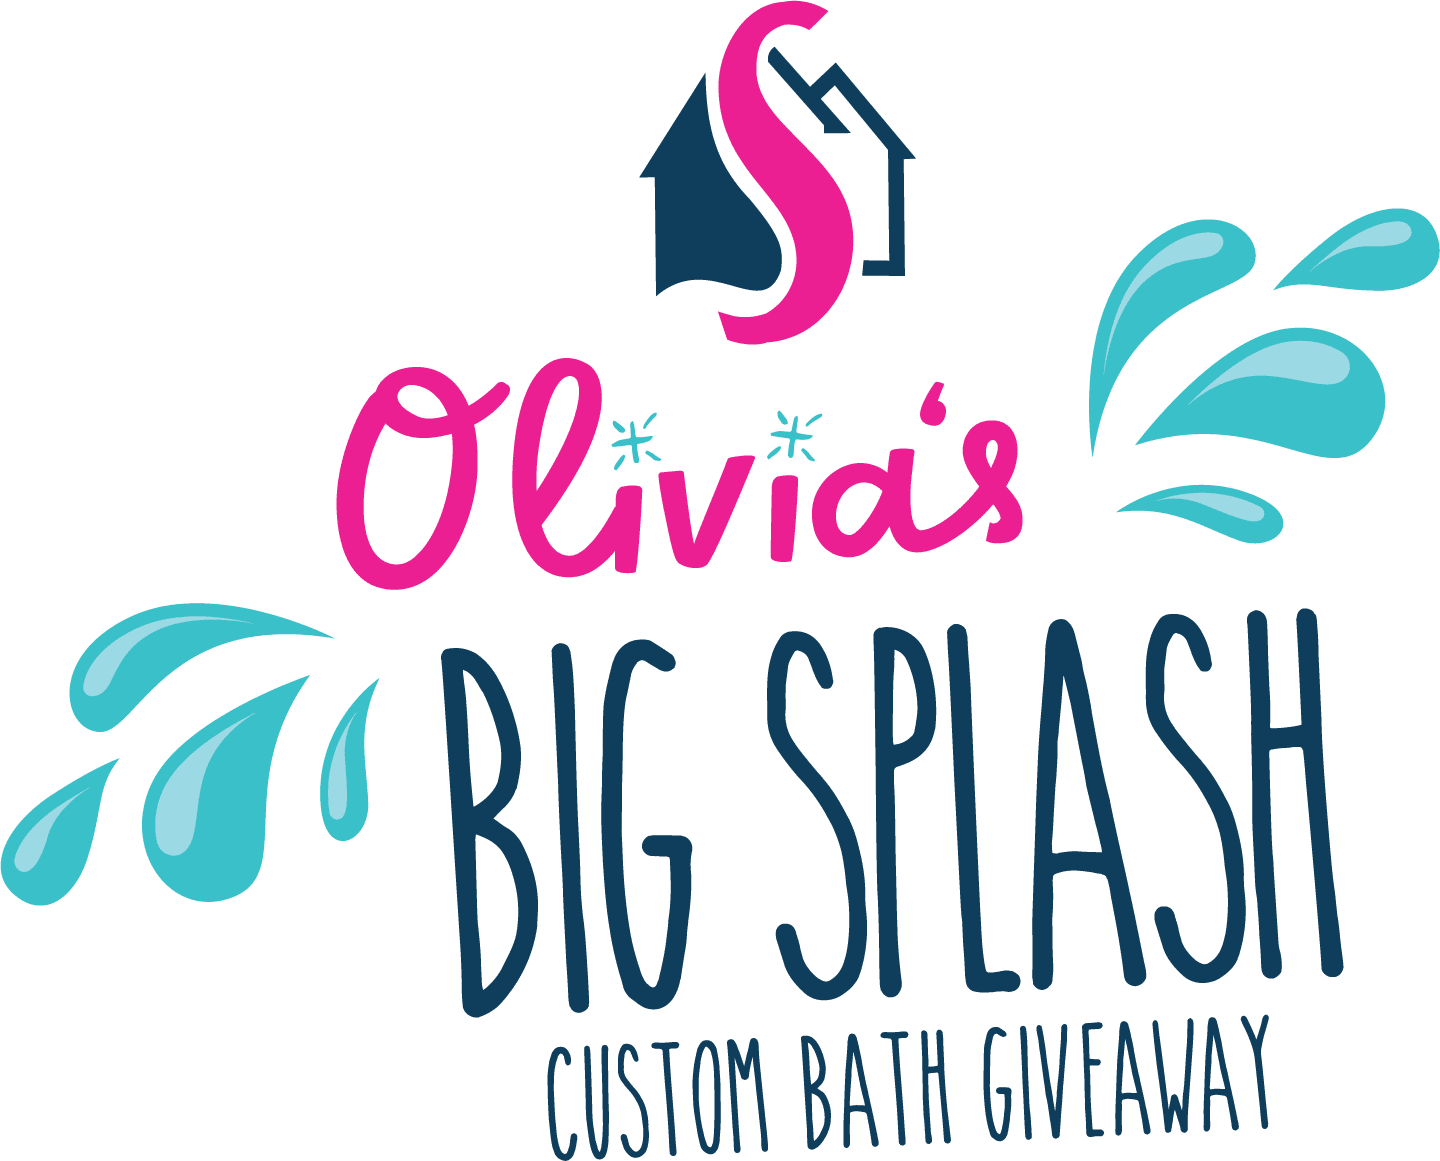 Olivia's Big Splash Custom Bath Giveaway